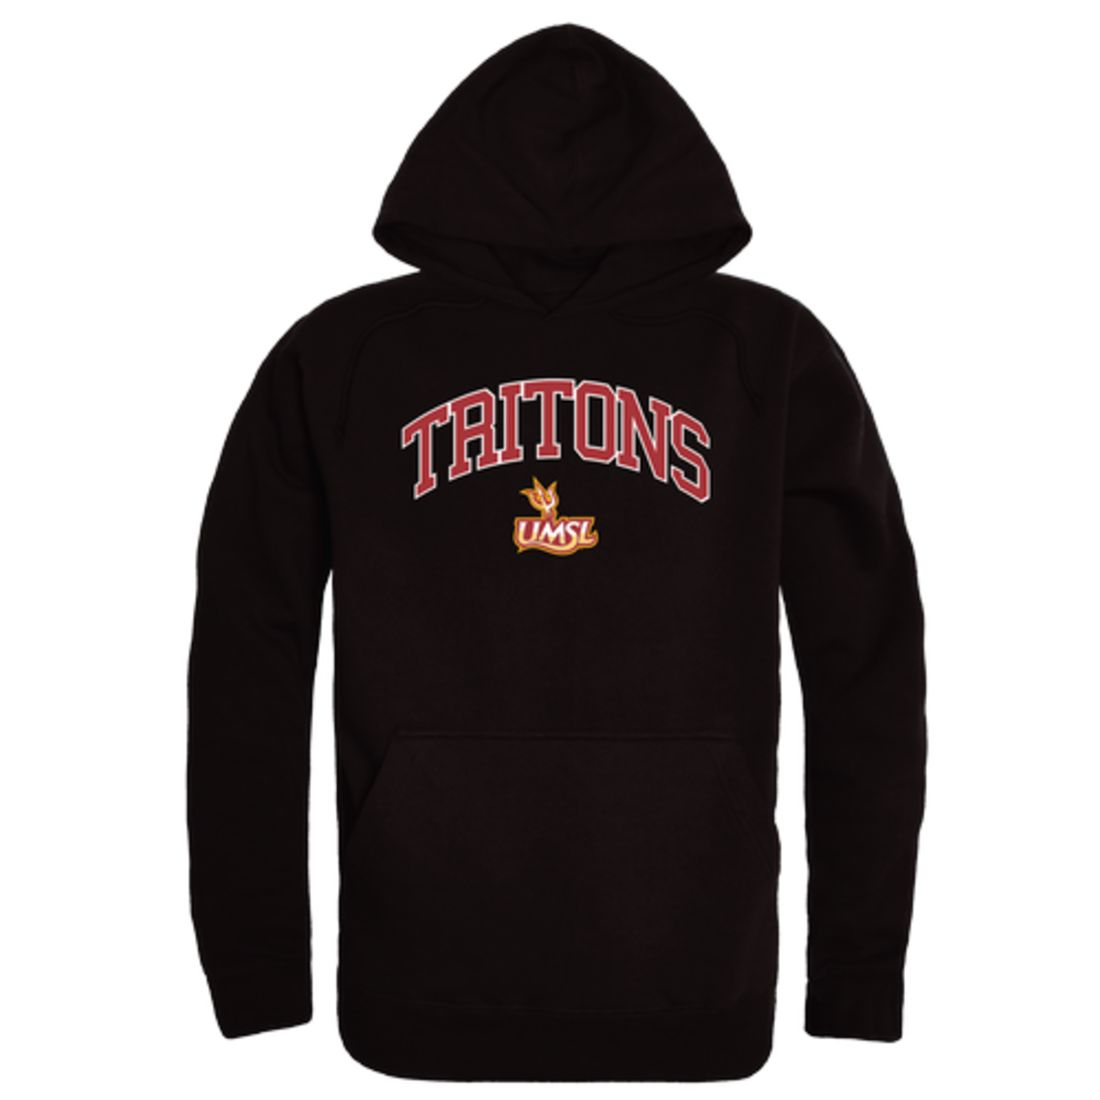 University of Missouri-Saint Louis Tritons Campus Fleece Hoodie Sweatshirts